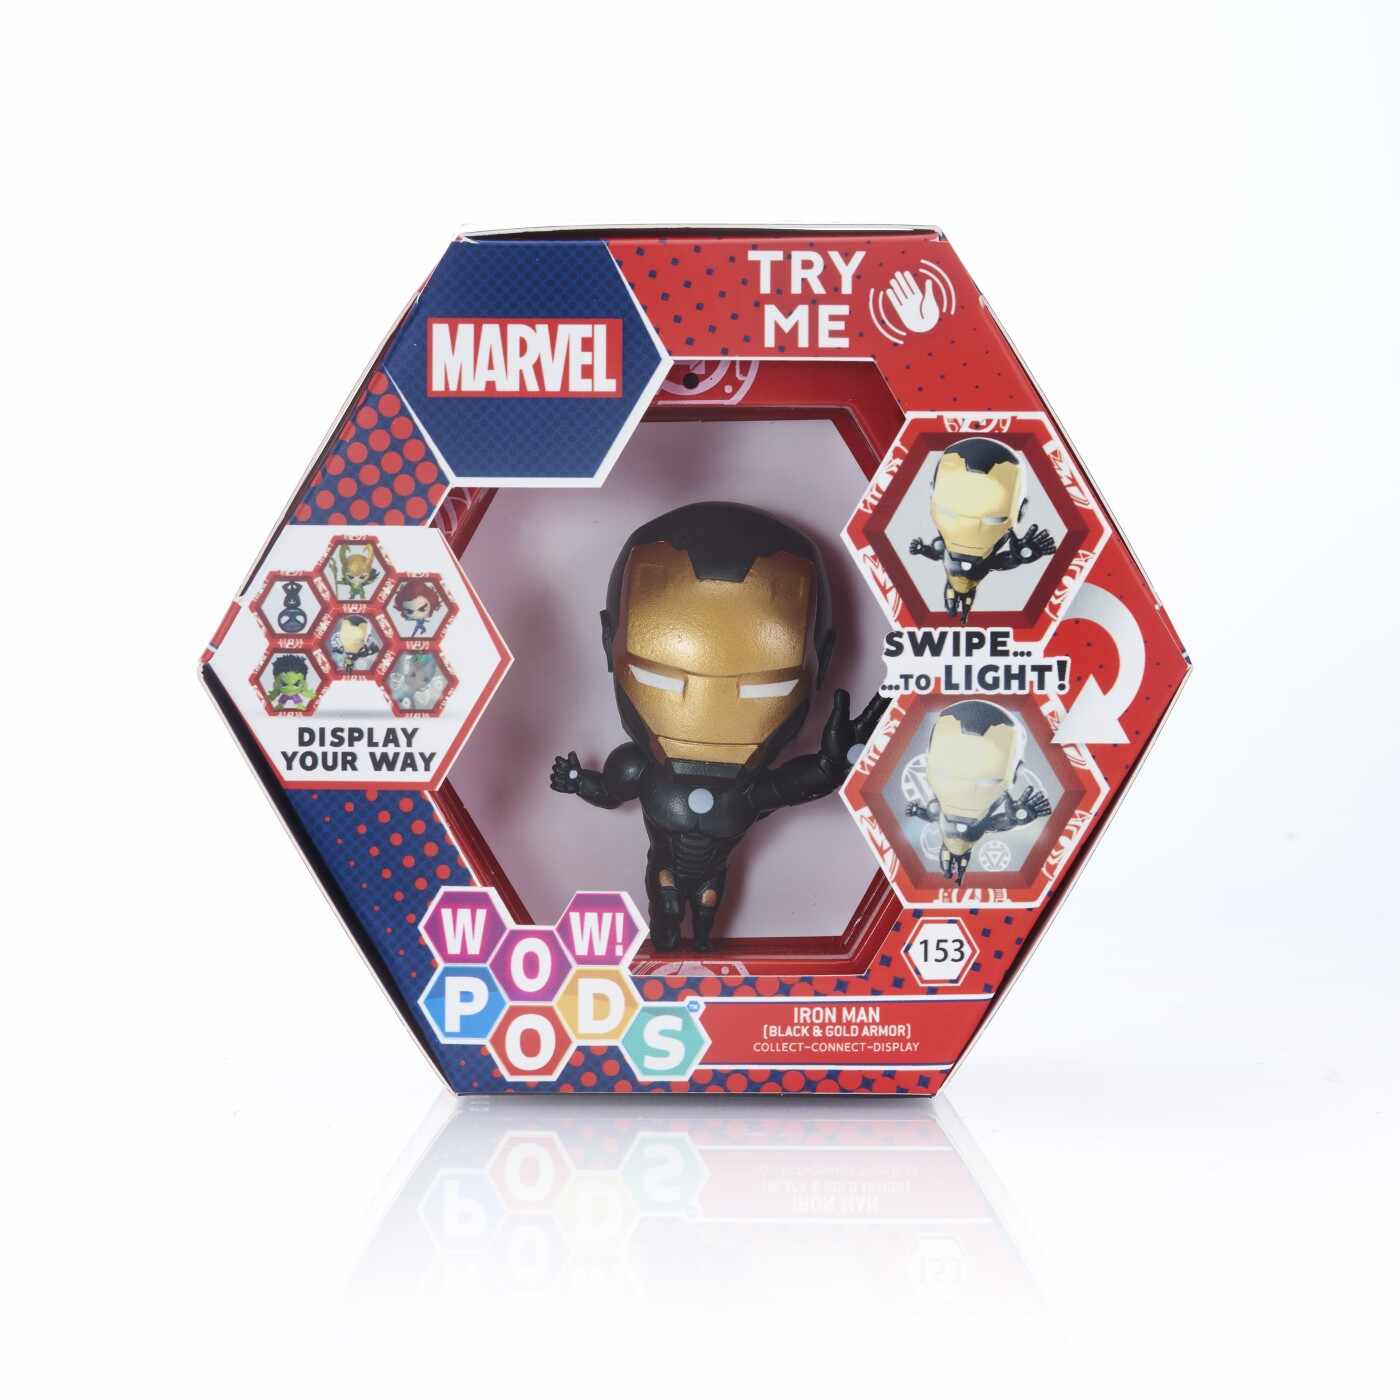 Figurina Wow! Stuff – Marvel Iron Man cu armura negru si auriu | Wow! Pods